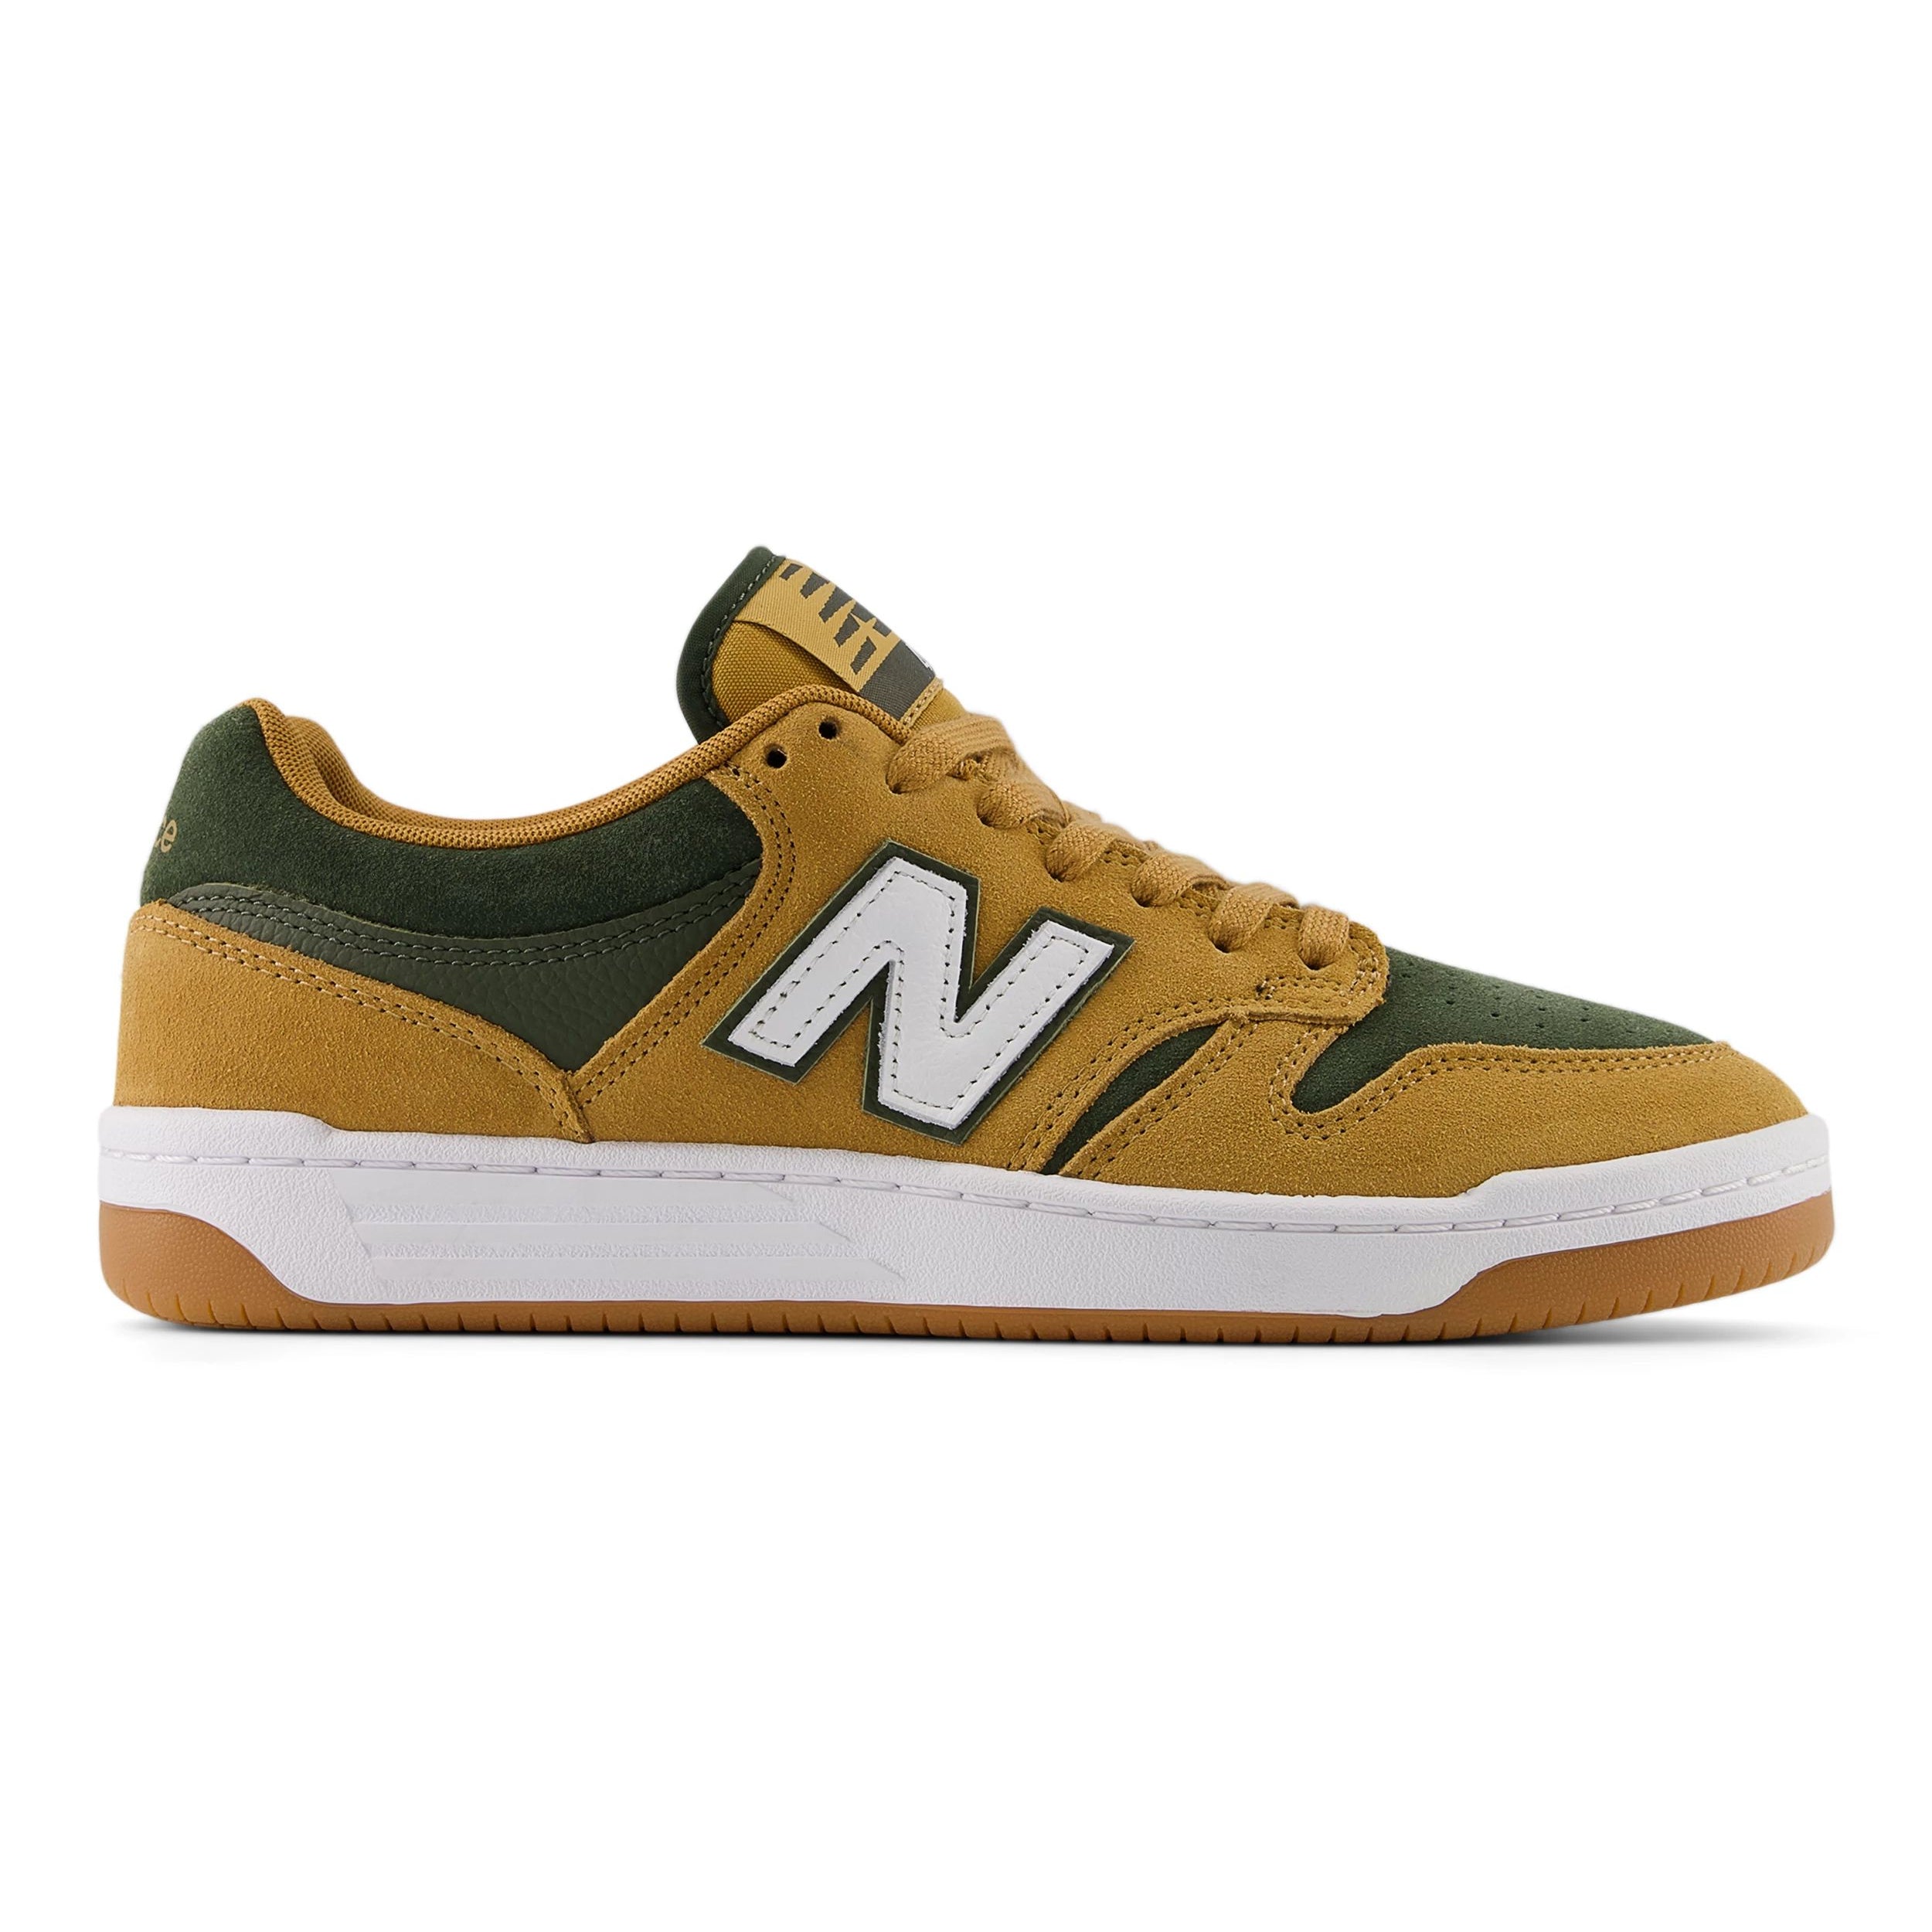 Tan/Green 480 NB Numeric Skate Shoe